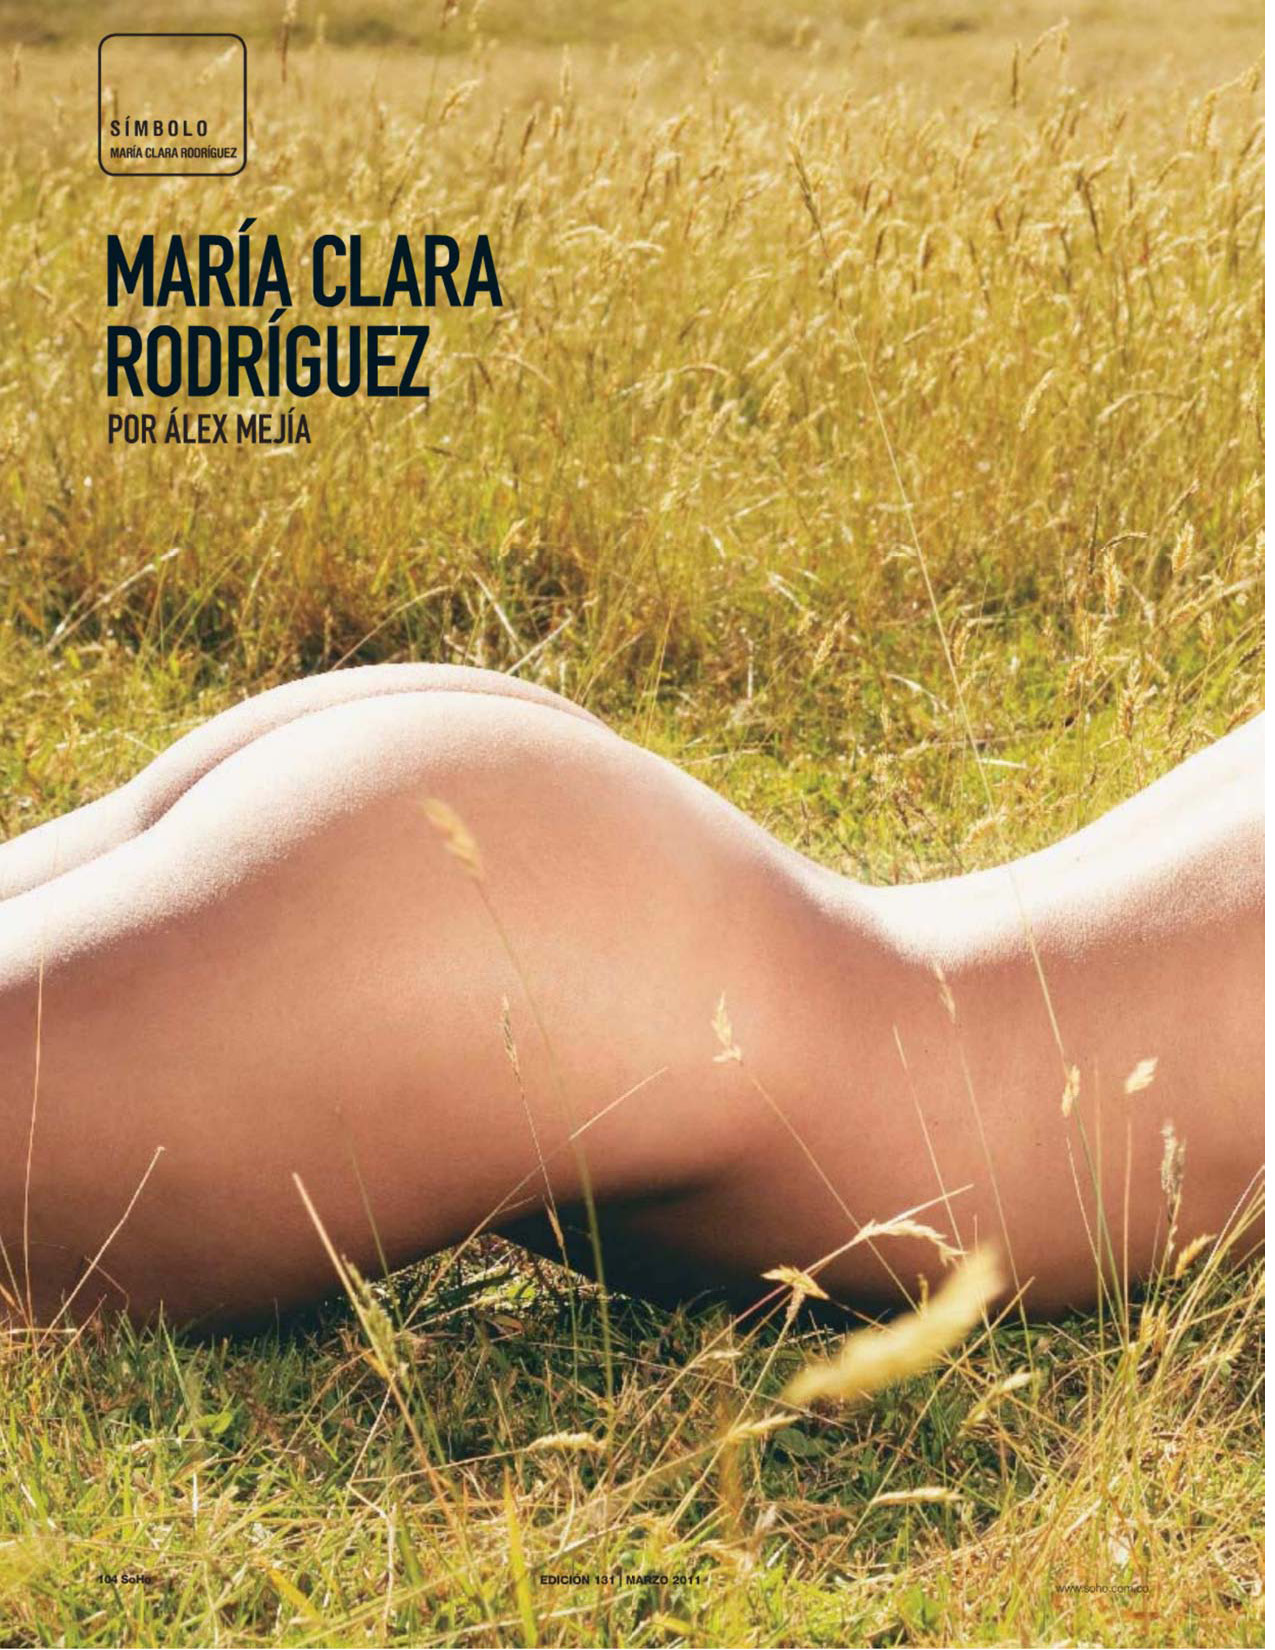 Maria Clara Rodriguez in SoHo Magazine.